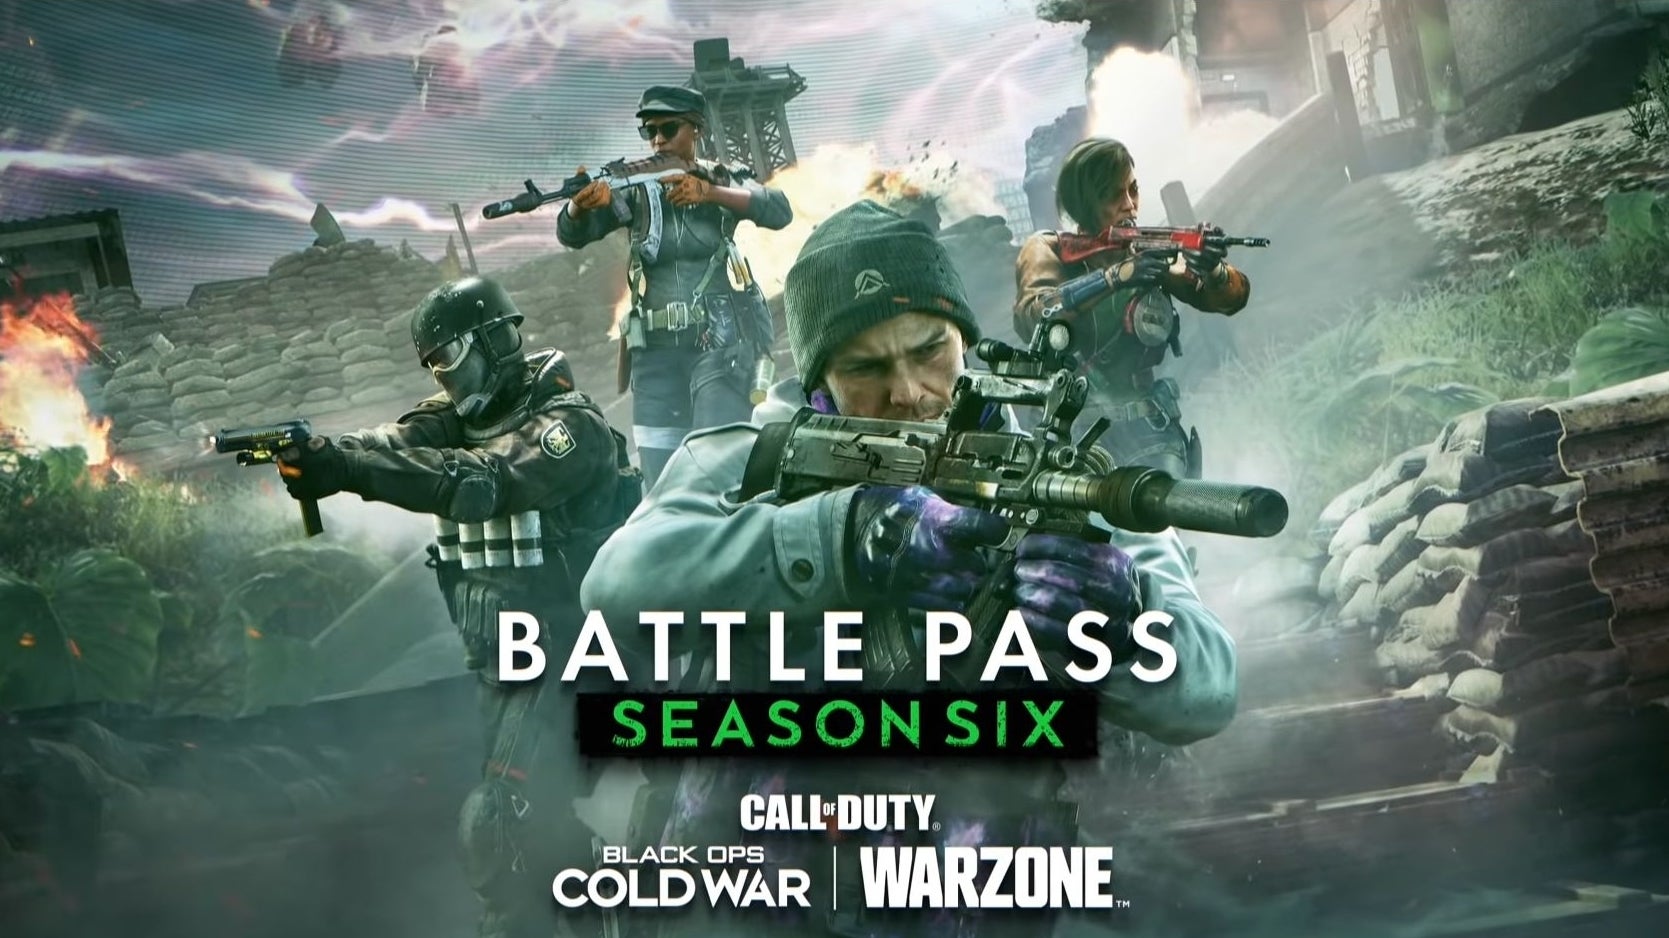 Image for Black Ops - Cold War, Warzone Season 6 Battle Pass skins and Operators, including Panda, Mason and Aurora Borealis Tier 100 rewards